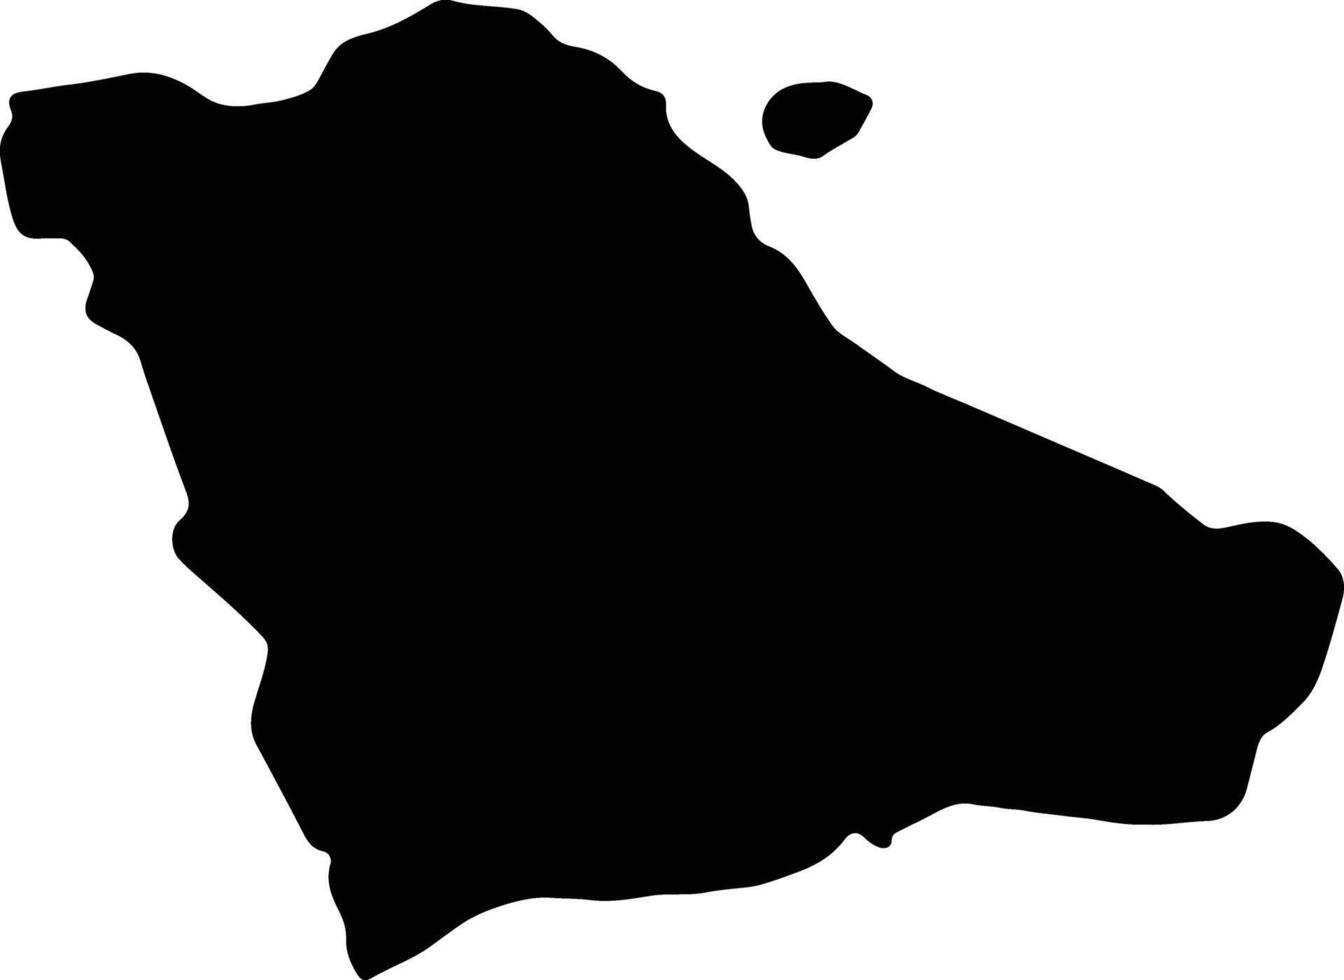 gegharkunik Armenia silhouette carta geografica vettore